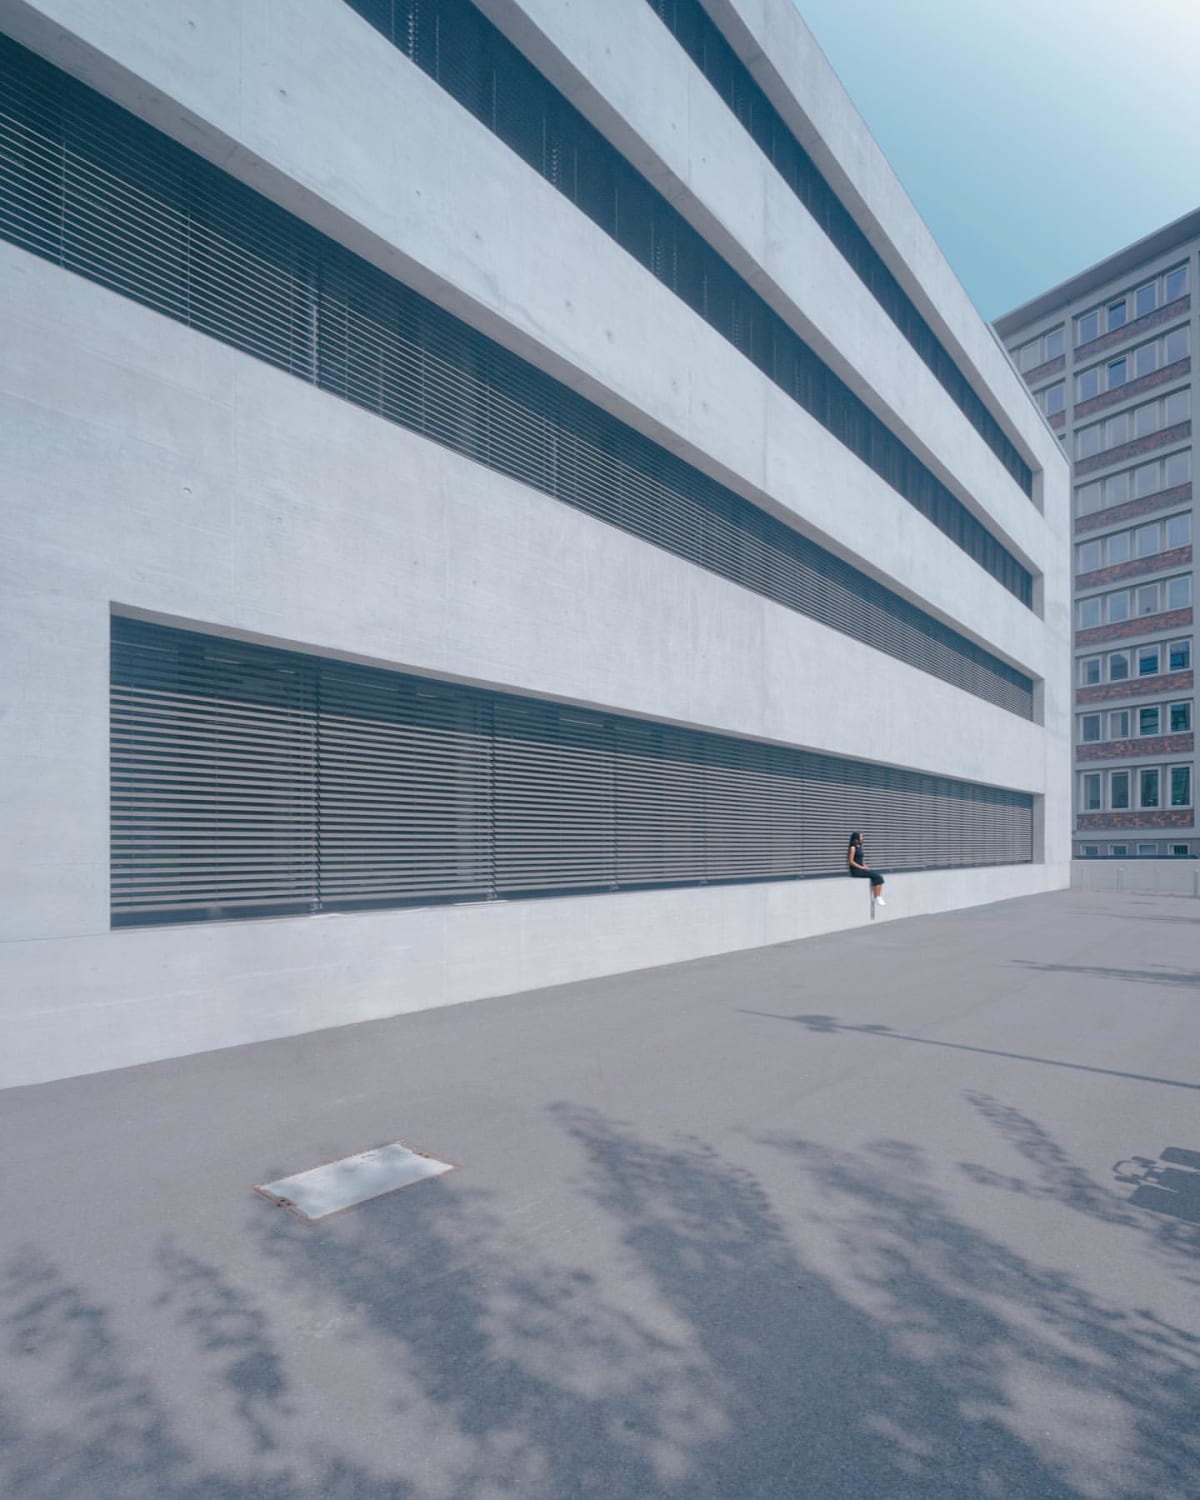 Minimalist Architecture and Urban Photography by Matthias Freissler